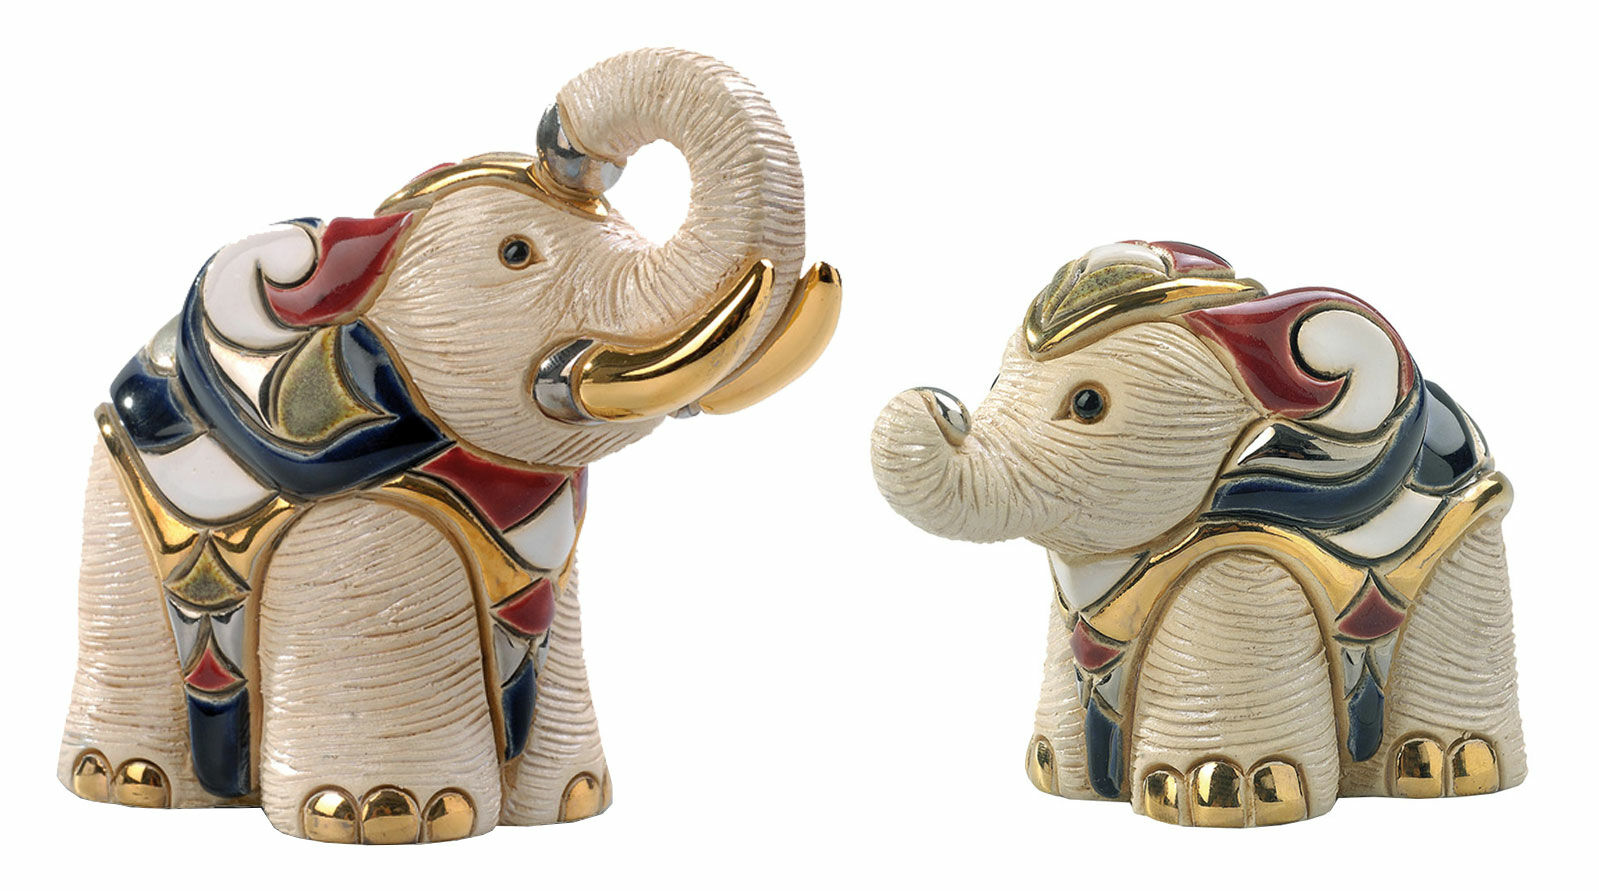 Set of 2 ceramic figures "White Elephant and Baby"